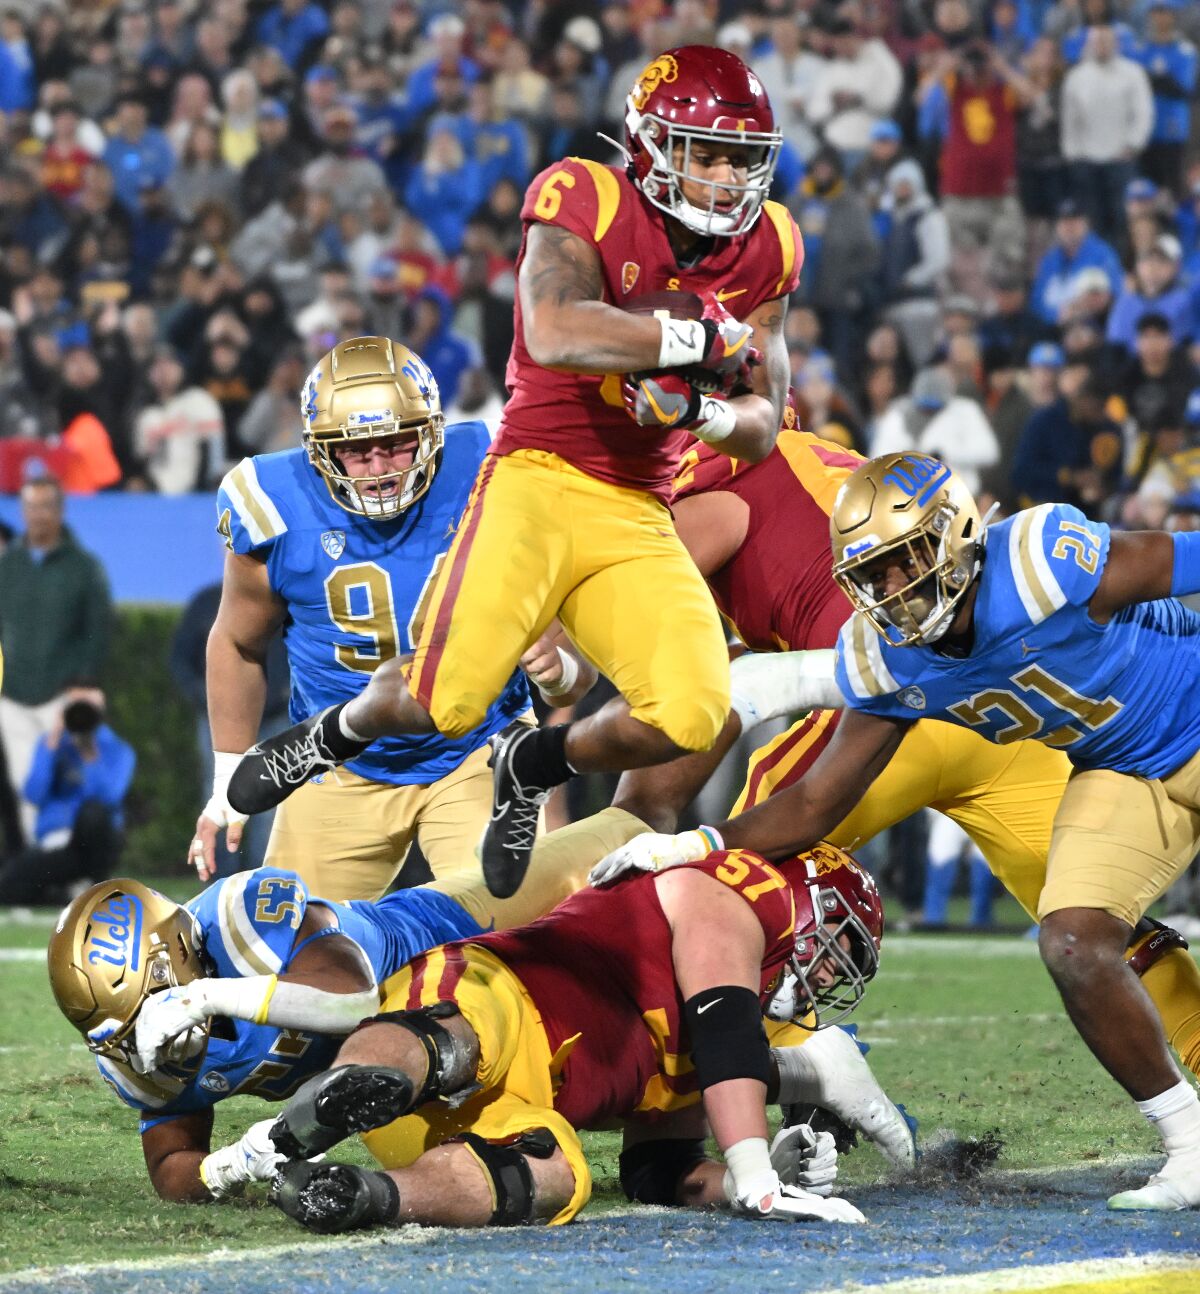 USC running back Austin Jones scores a touchdown against UCLA in the third quarter Nov. 19, 2022.